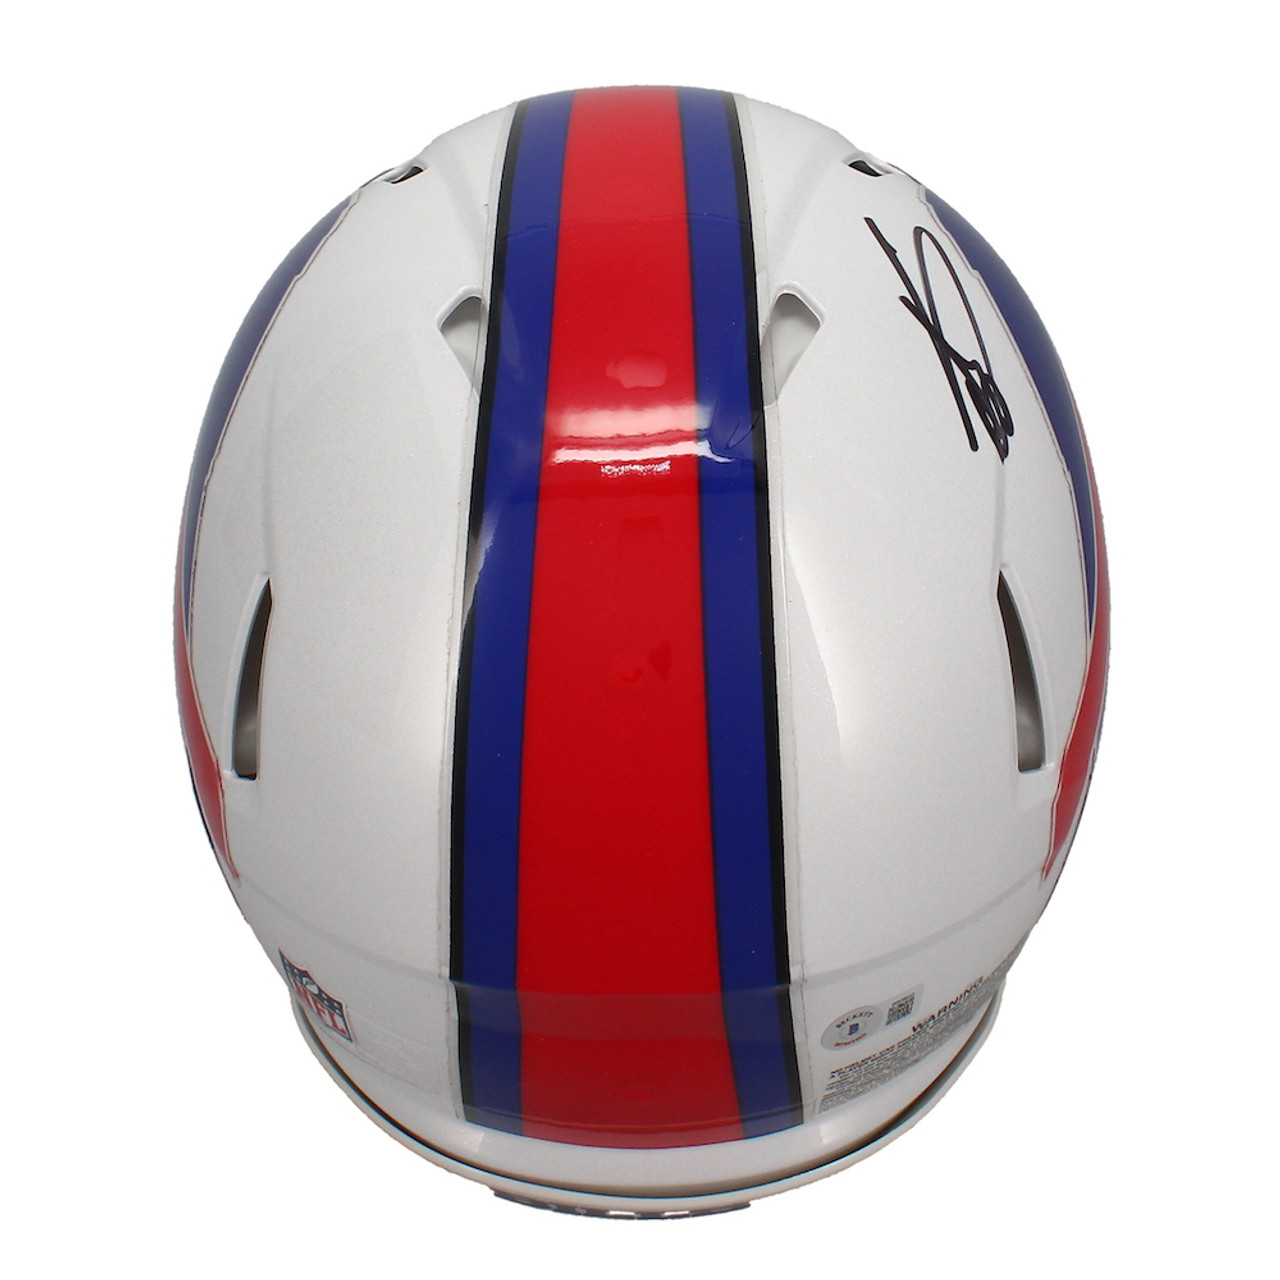 Stefon Diggs Autographed Buffalo Bills Authentic Speed Helmet w